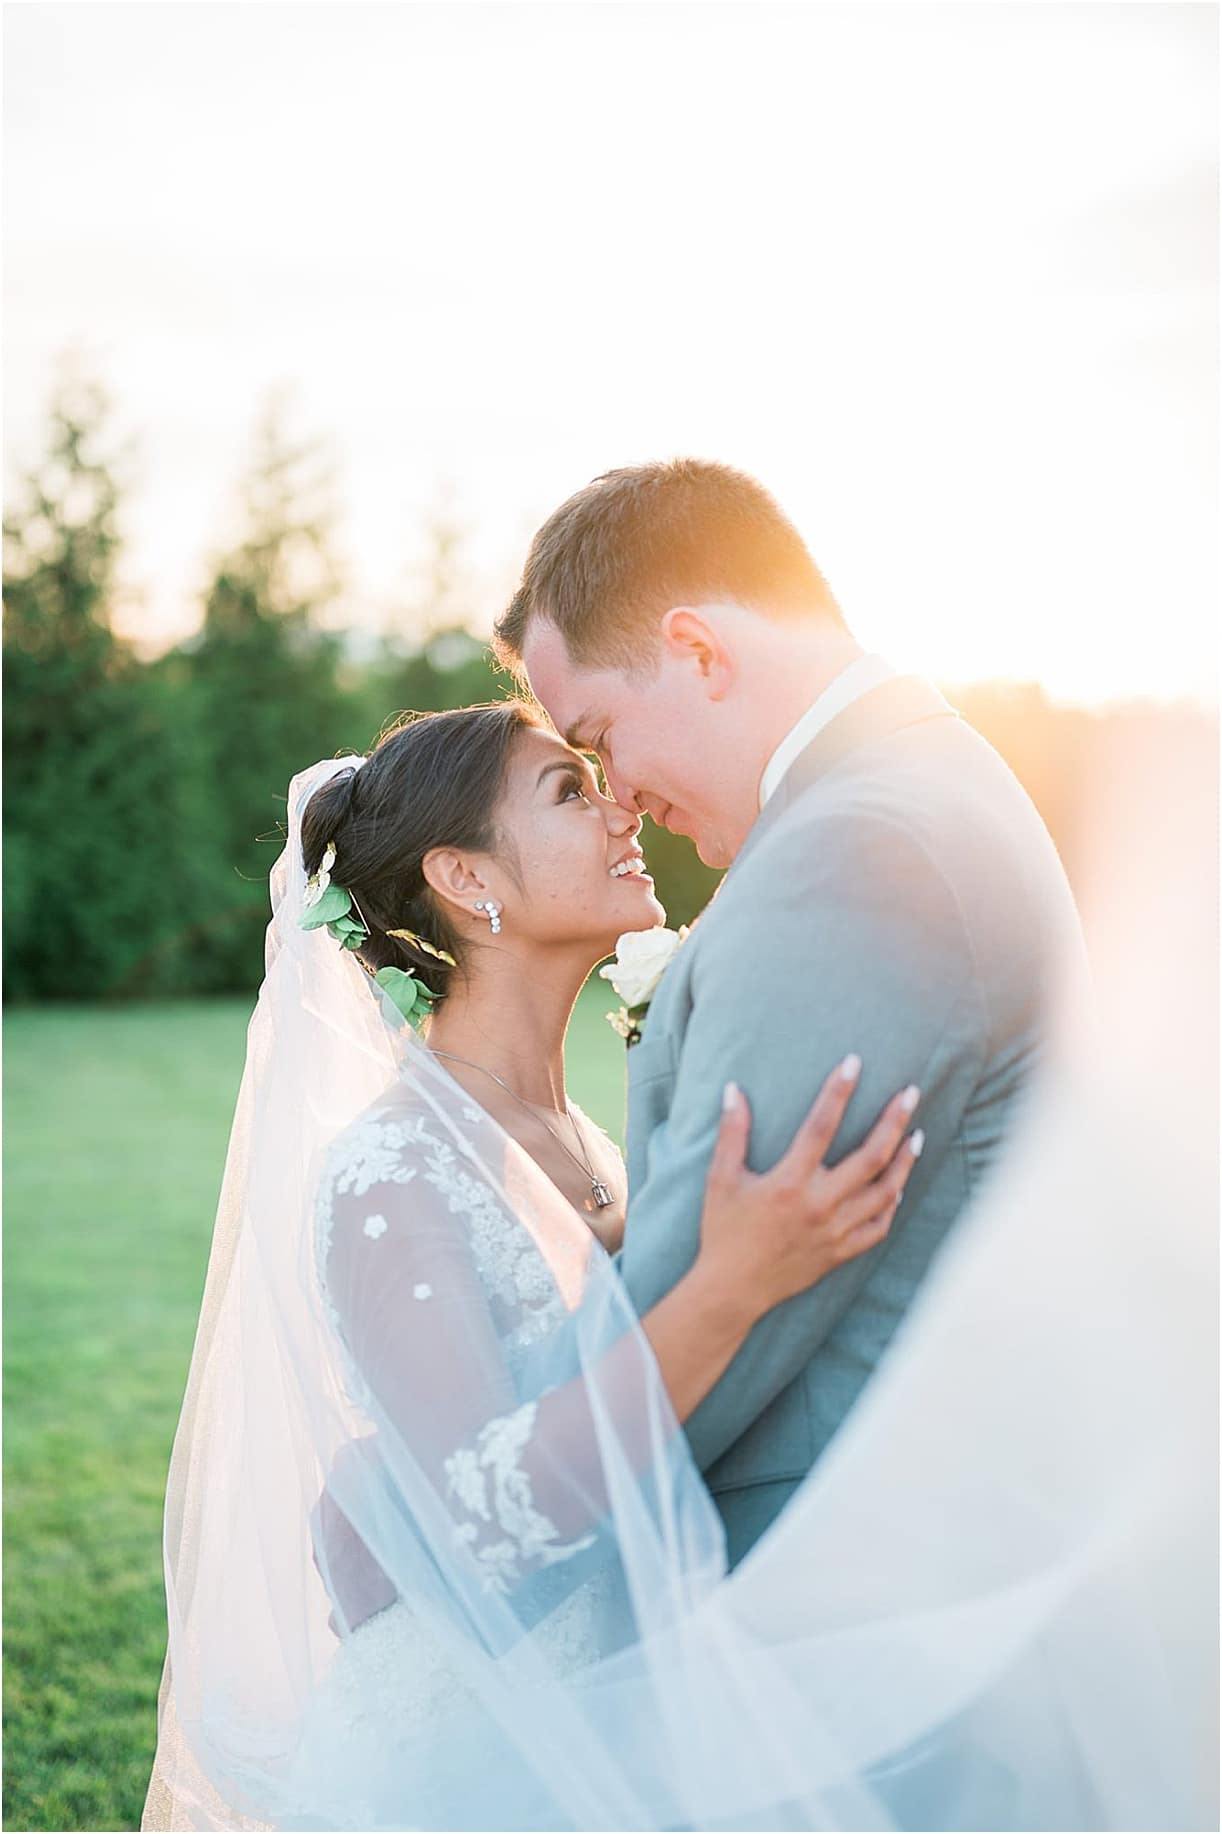 Wedding Photography Tips - Advice from the Pros | Hill City Bride Virginia Wedding Blog